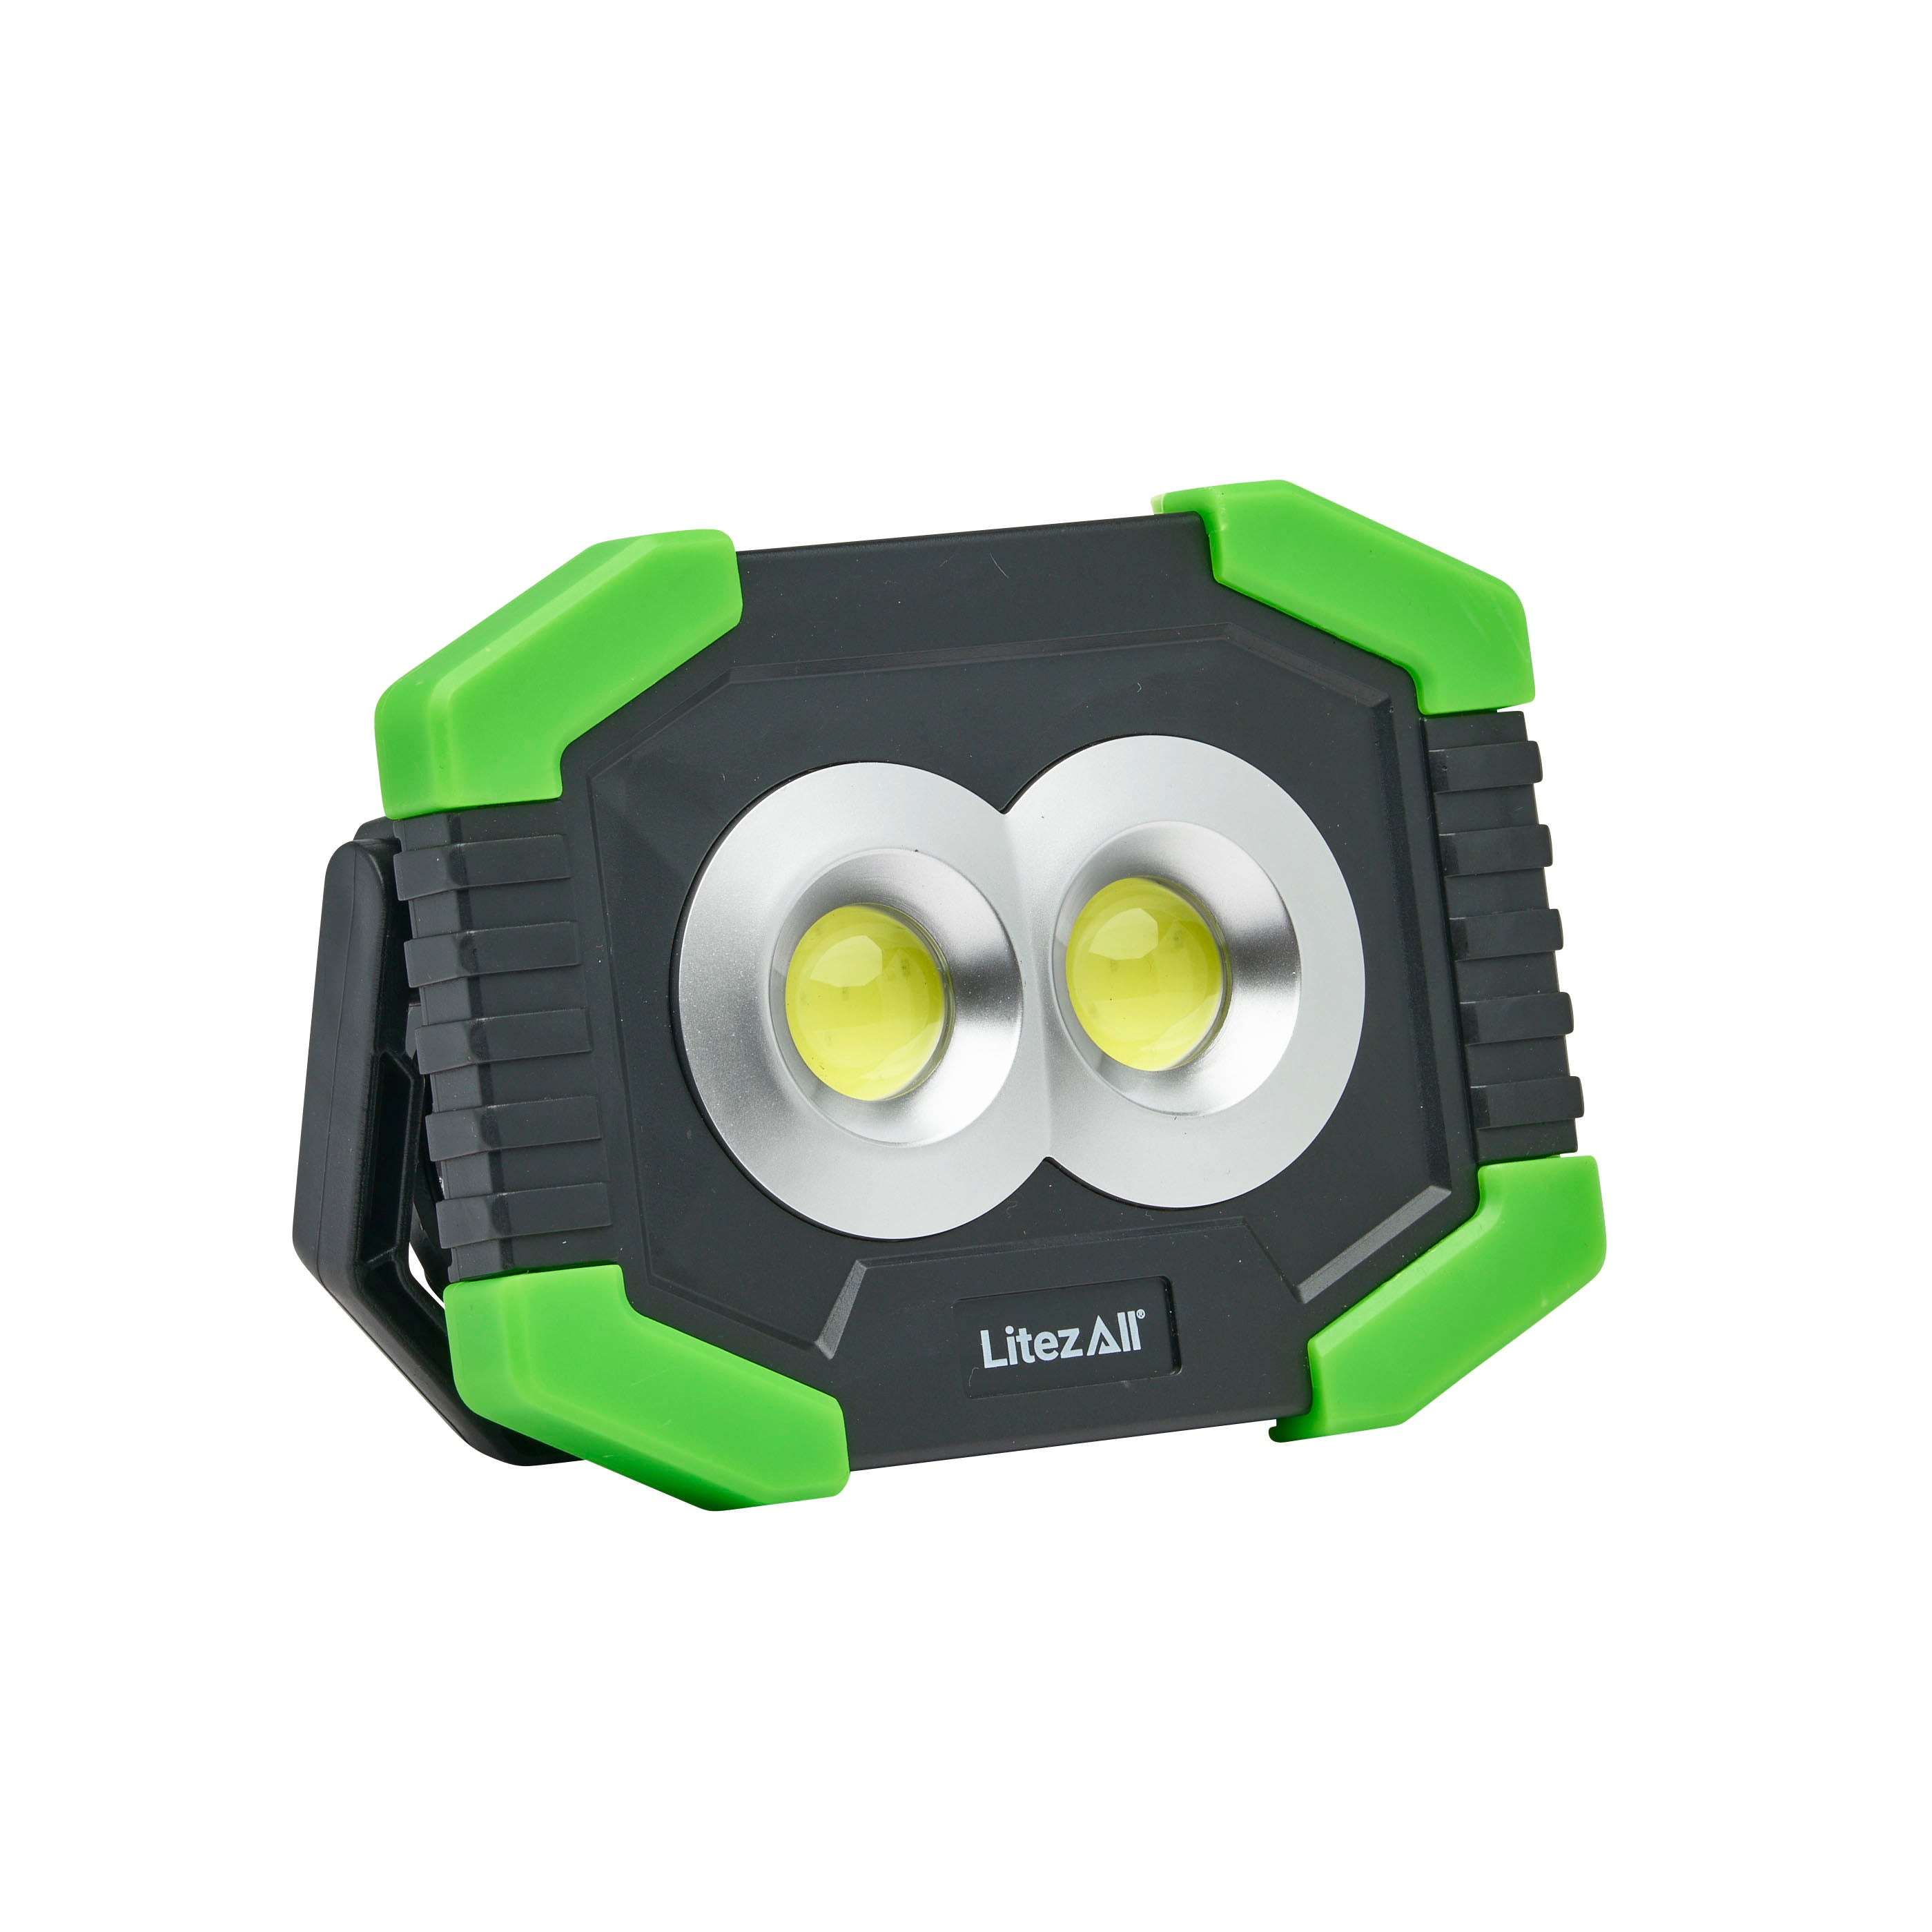 LitezAll 200 Lumen Work Light with Flashlight - LitezAll - Work Lights - 16